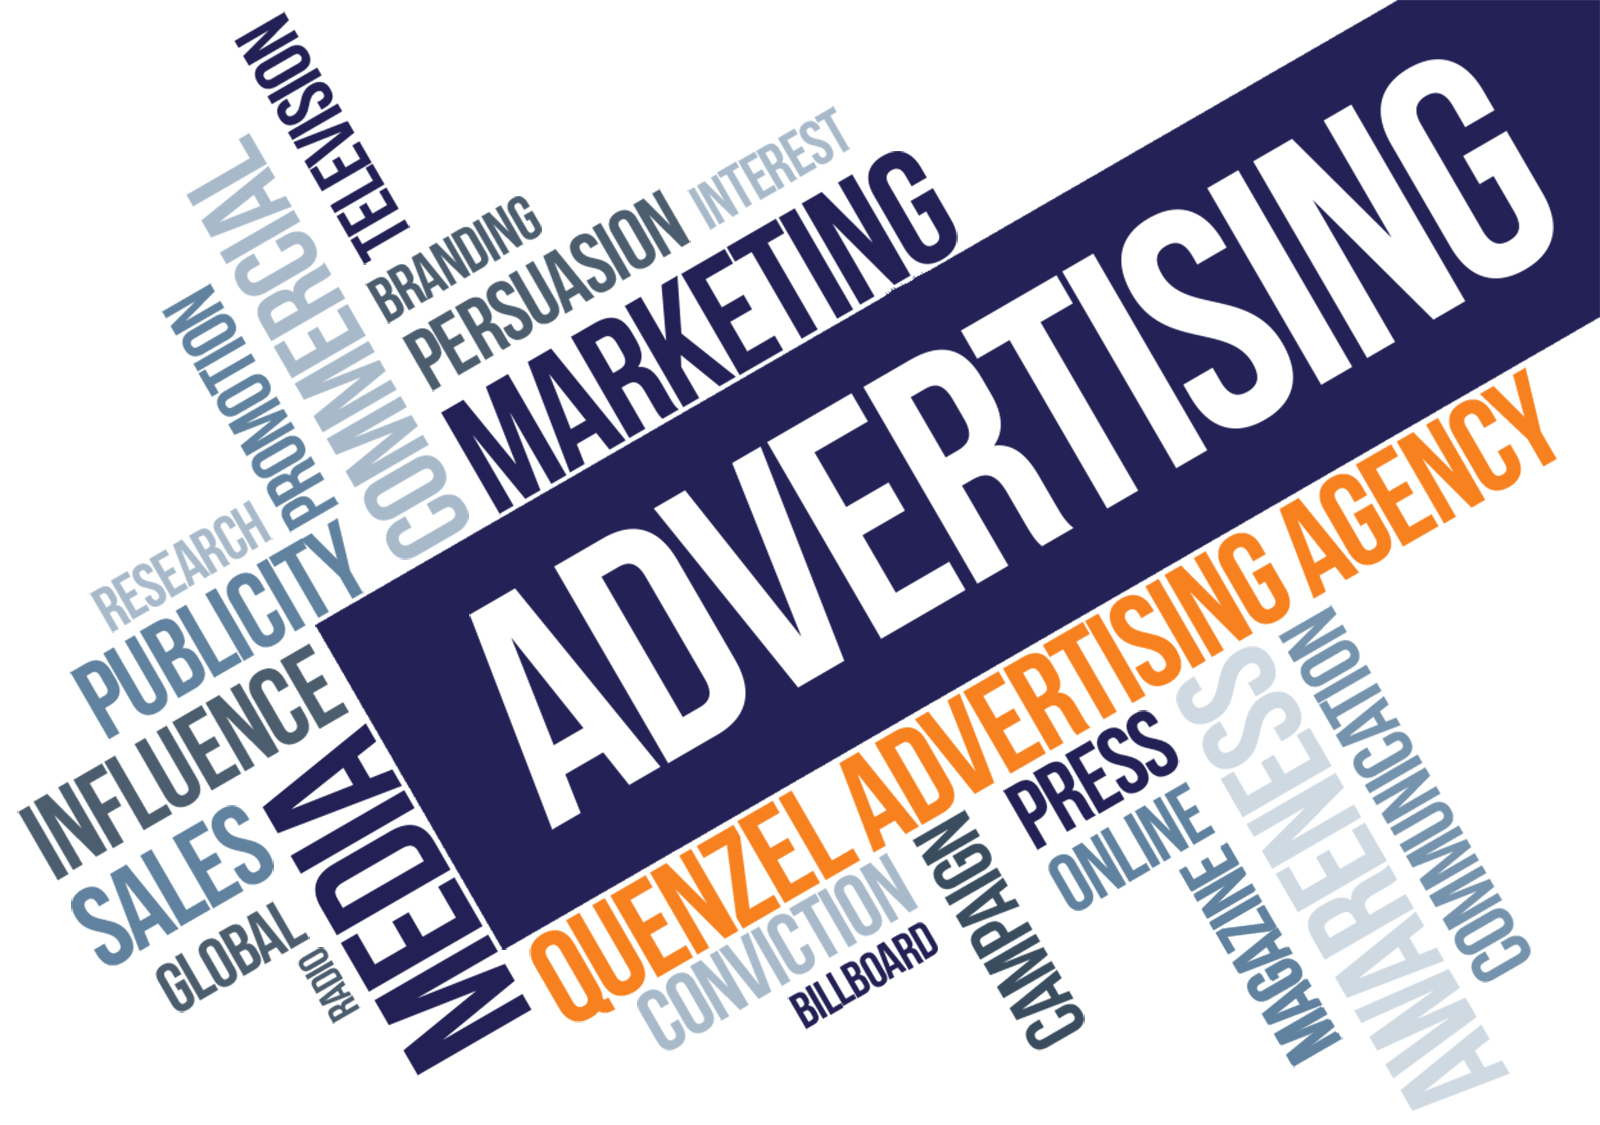 Advertising images. Рекламное агентство. Реклама рекламного агентства. Рекламное агентство иллюстрация. Рекламное агентство картинки.